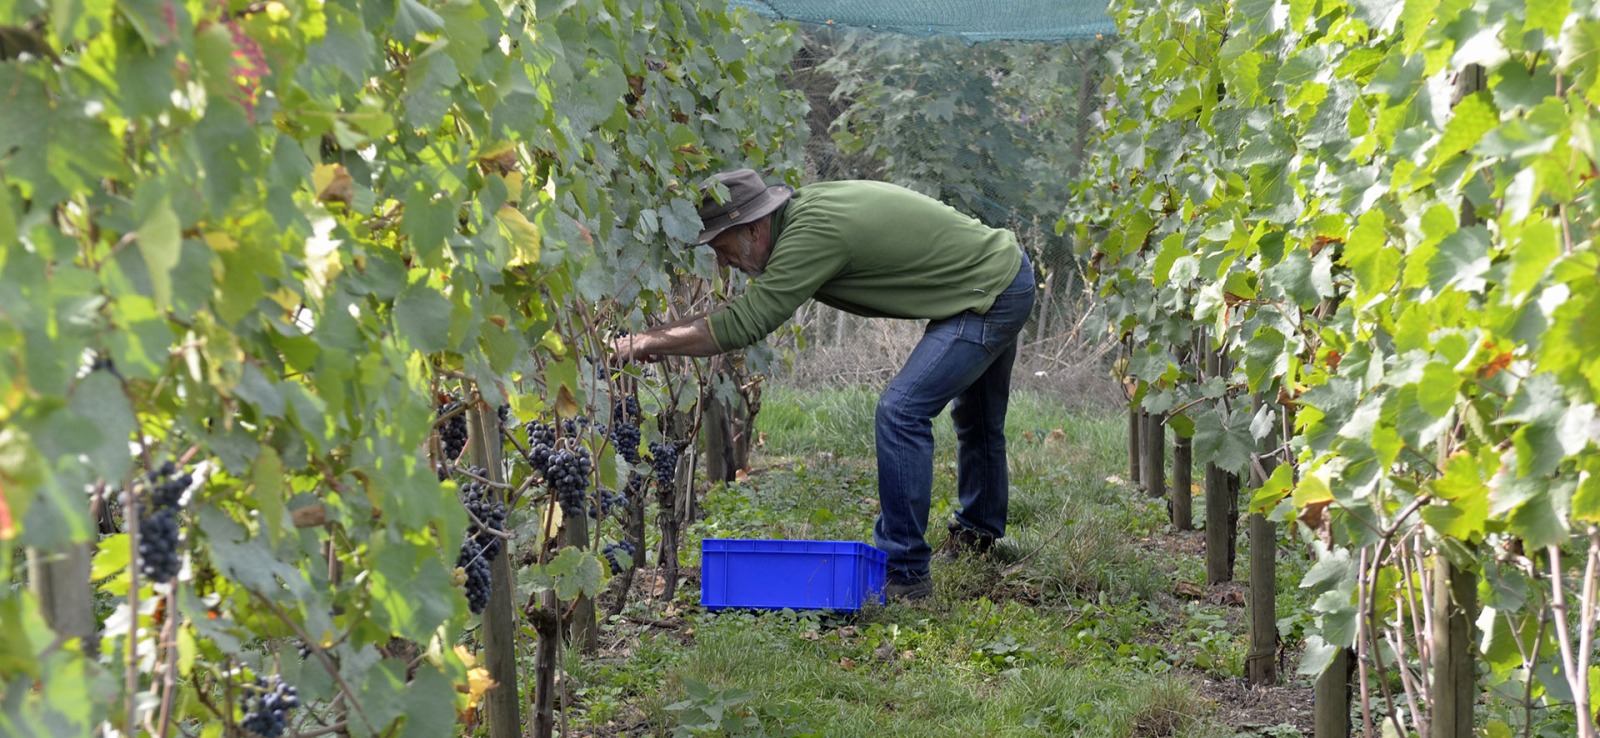 Jean Galler picks grapes in his vineyard in Chaudfontaine - Septem Triones vineyard - Belgian organic wine producer